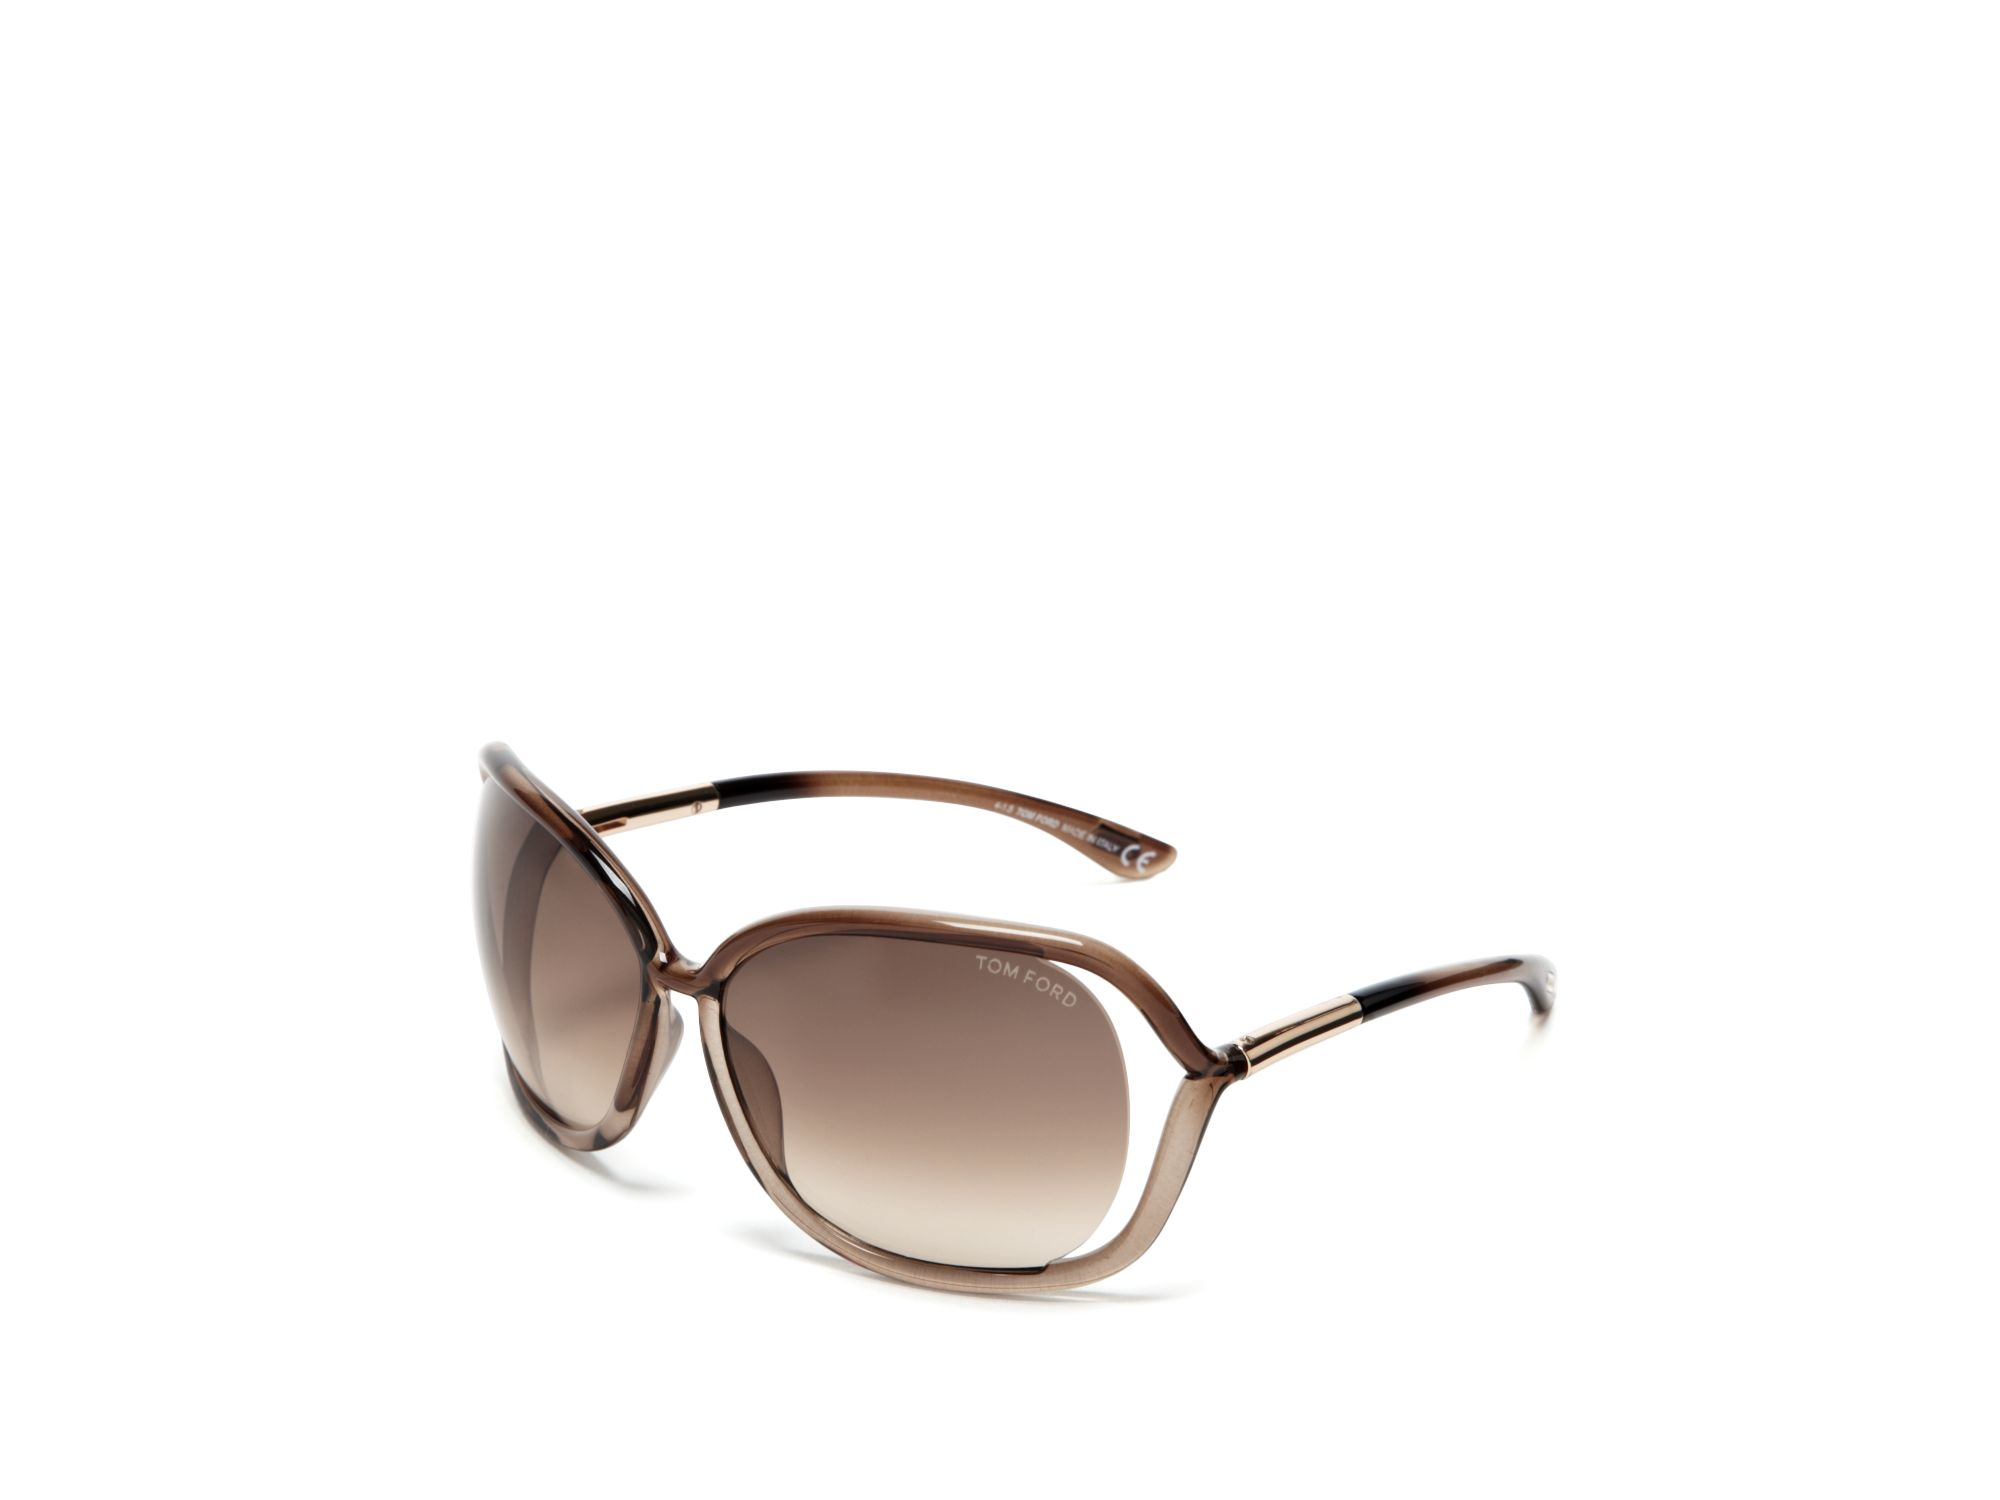 Tom Ford Raquel Sunglasses, 63mm in Metallic